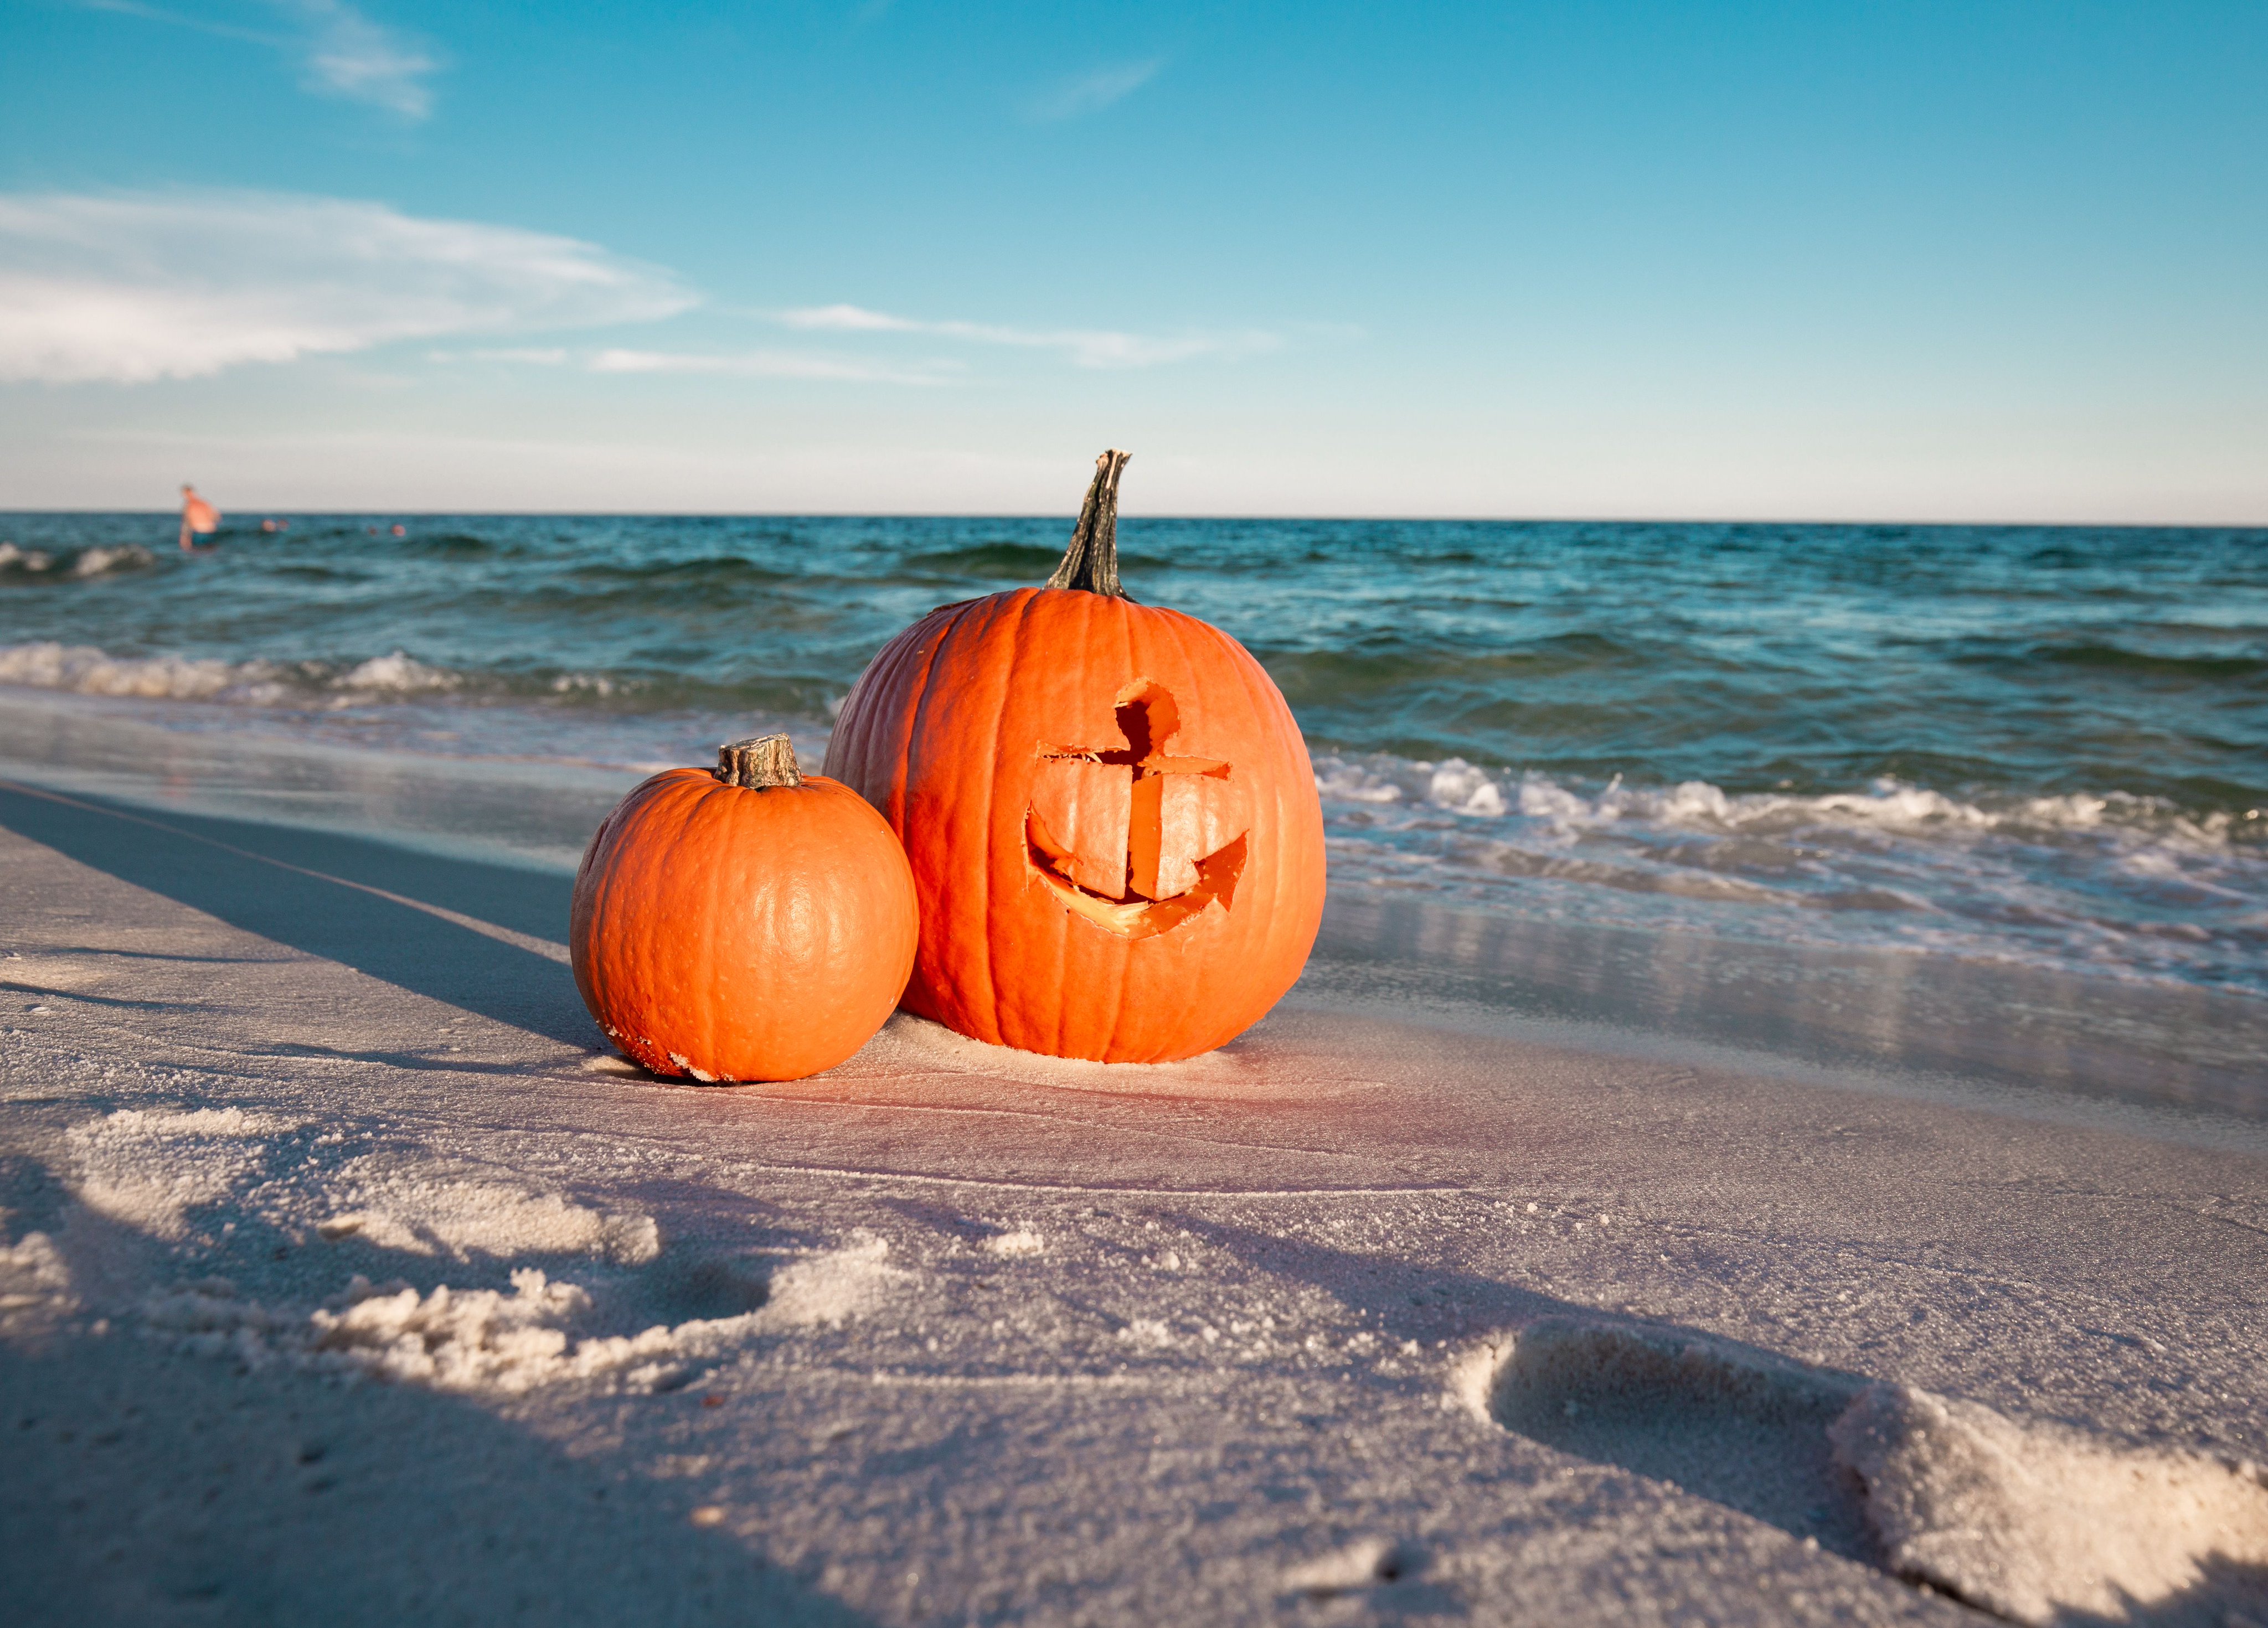 Best Western Premier Tides Hotel - Orange Beach on Twitter: "Ahoy, pumpkin!  It's the #FirstDayOfFall. 🎃🌊 #OrangeBeach #Alabama  https://t.co/o3E9jwoEBs" / Twitter